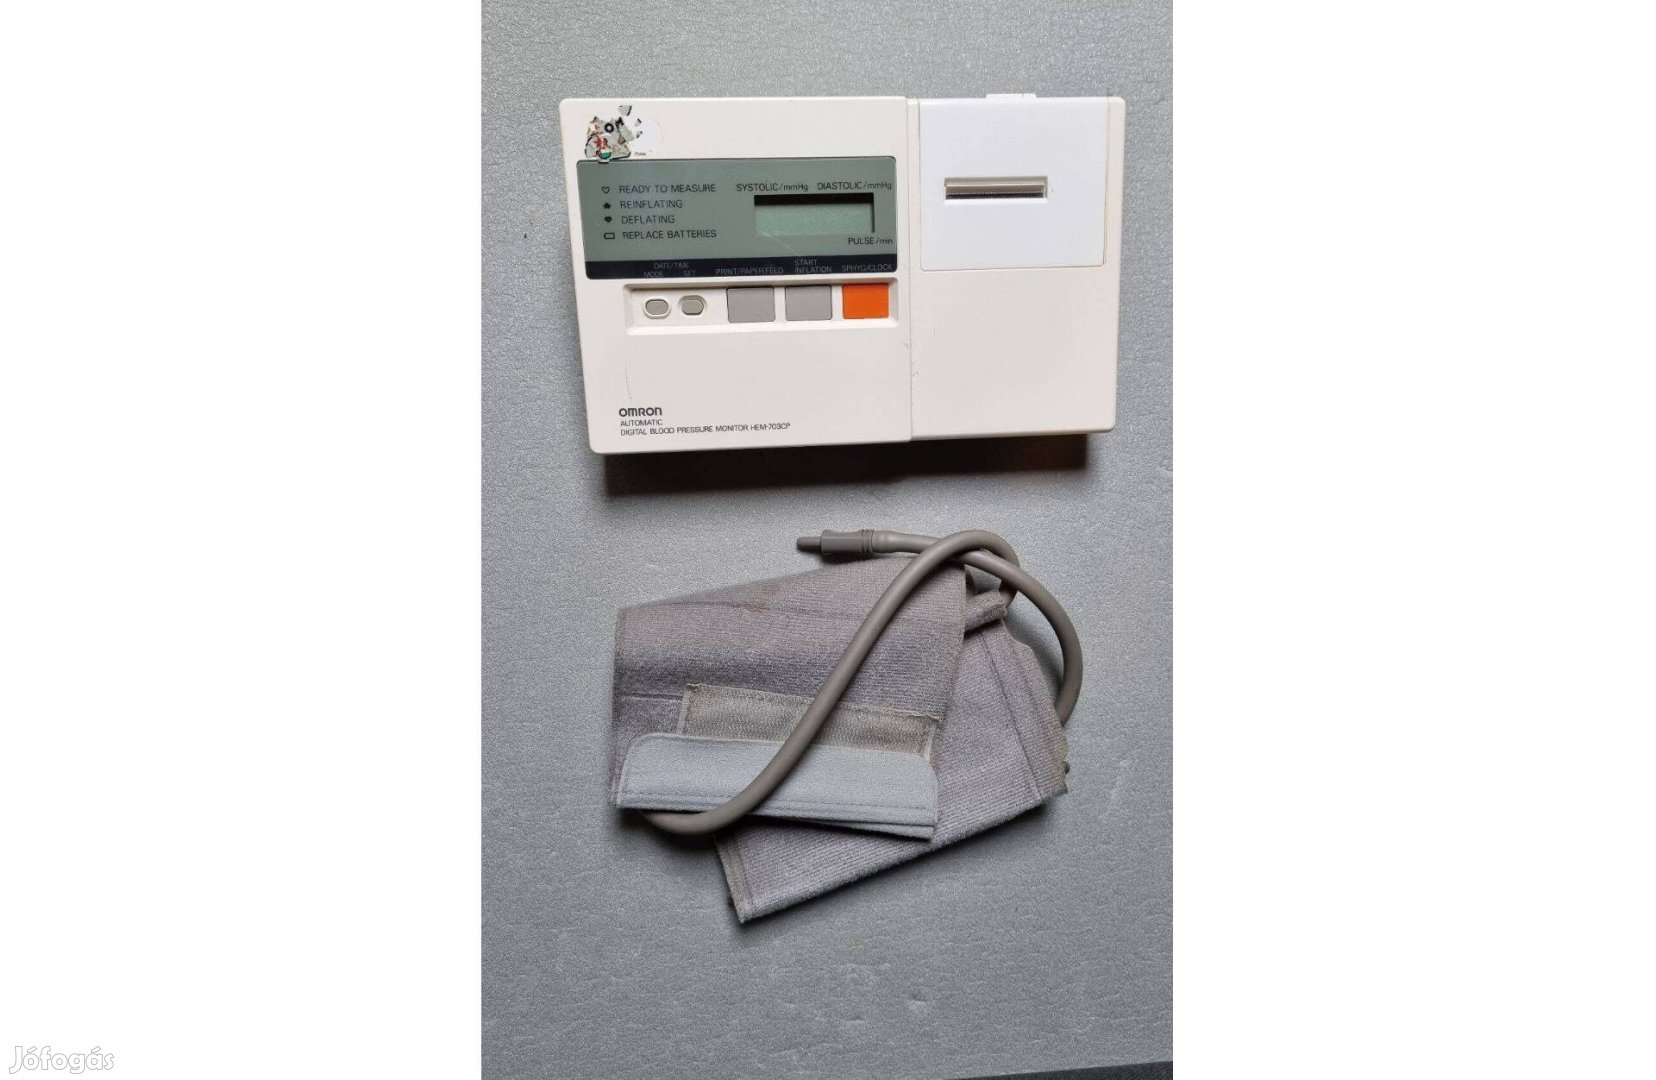 Omron digitális félkaros vérnyomásmérő HEM 703CP típusú